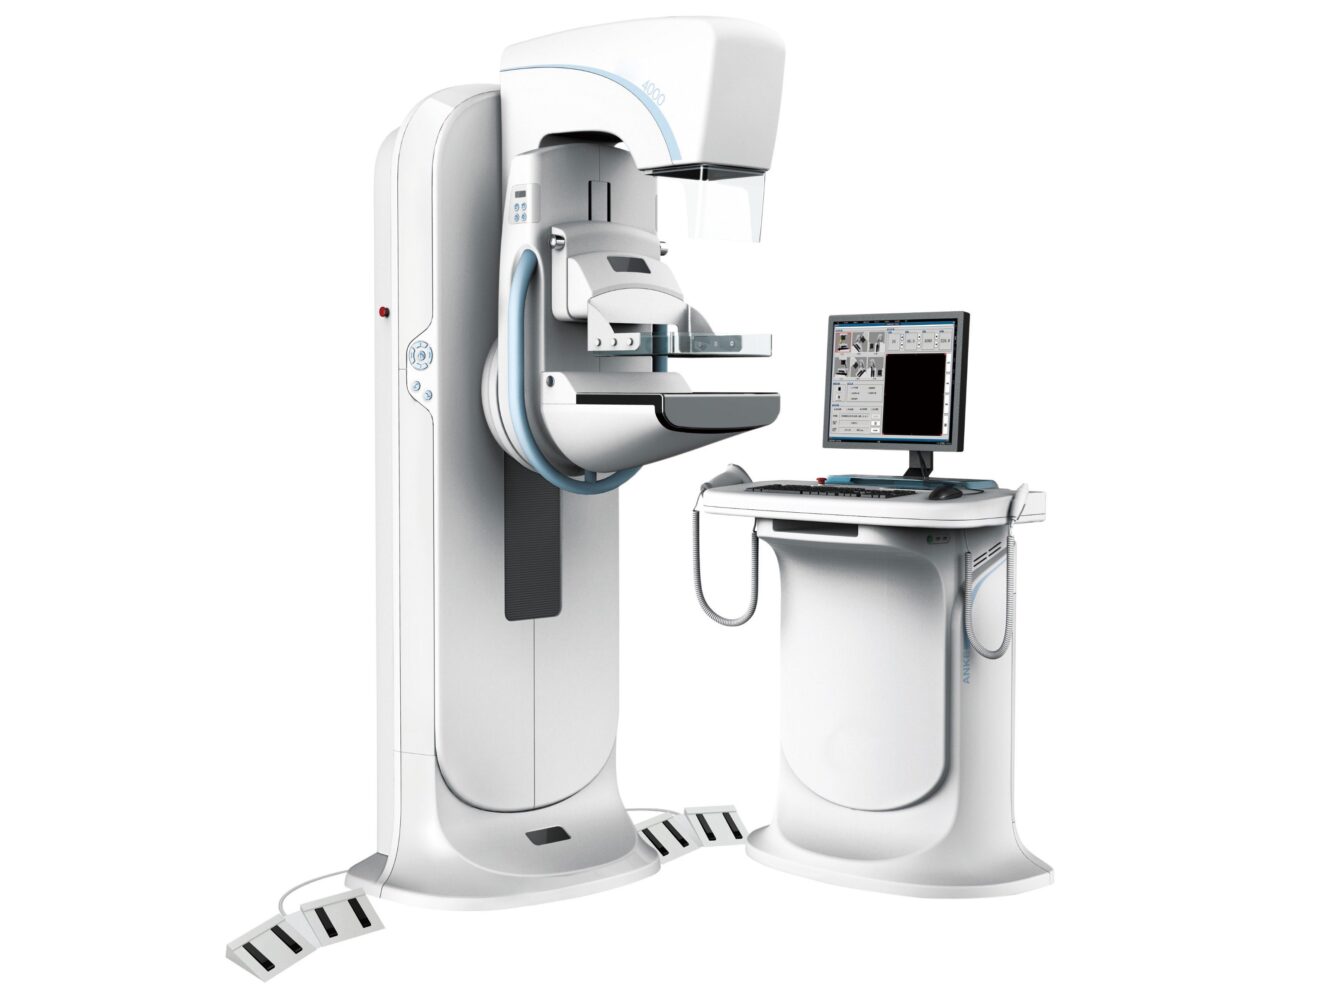 Digital Mammography X-ray Equipment Market